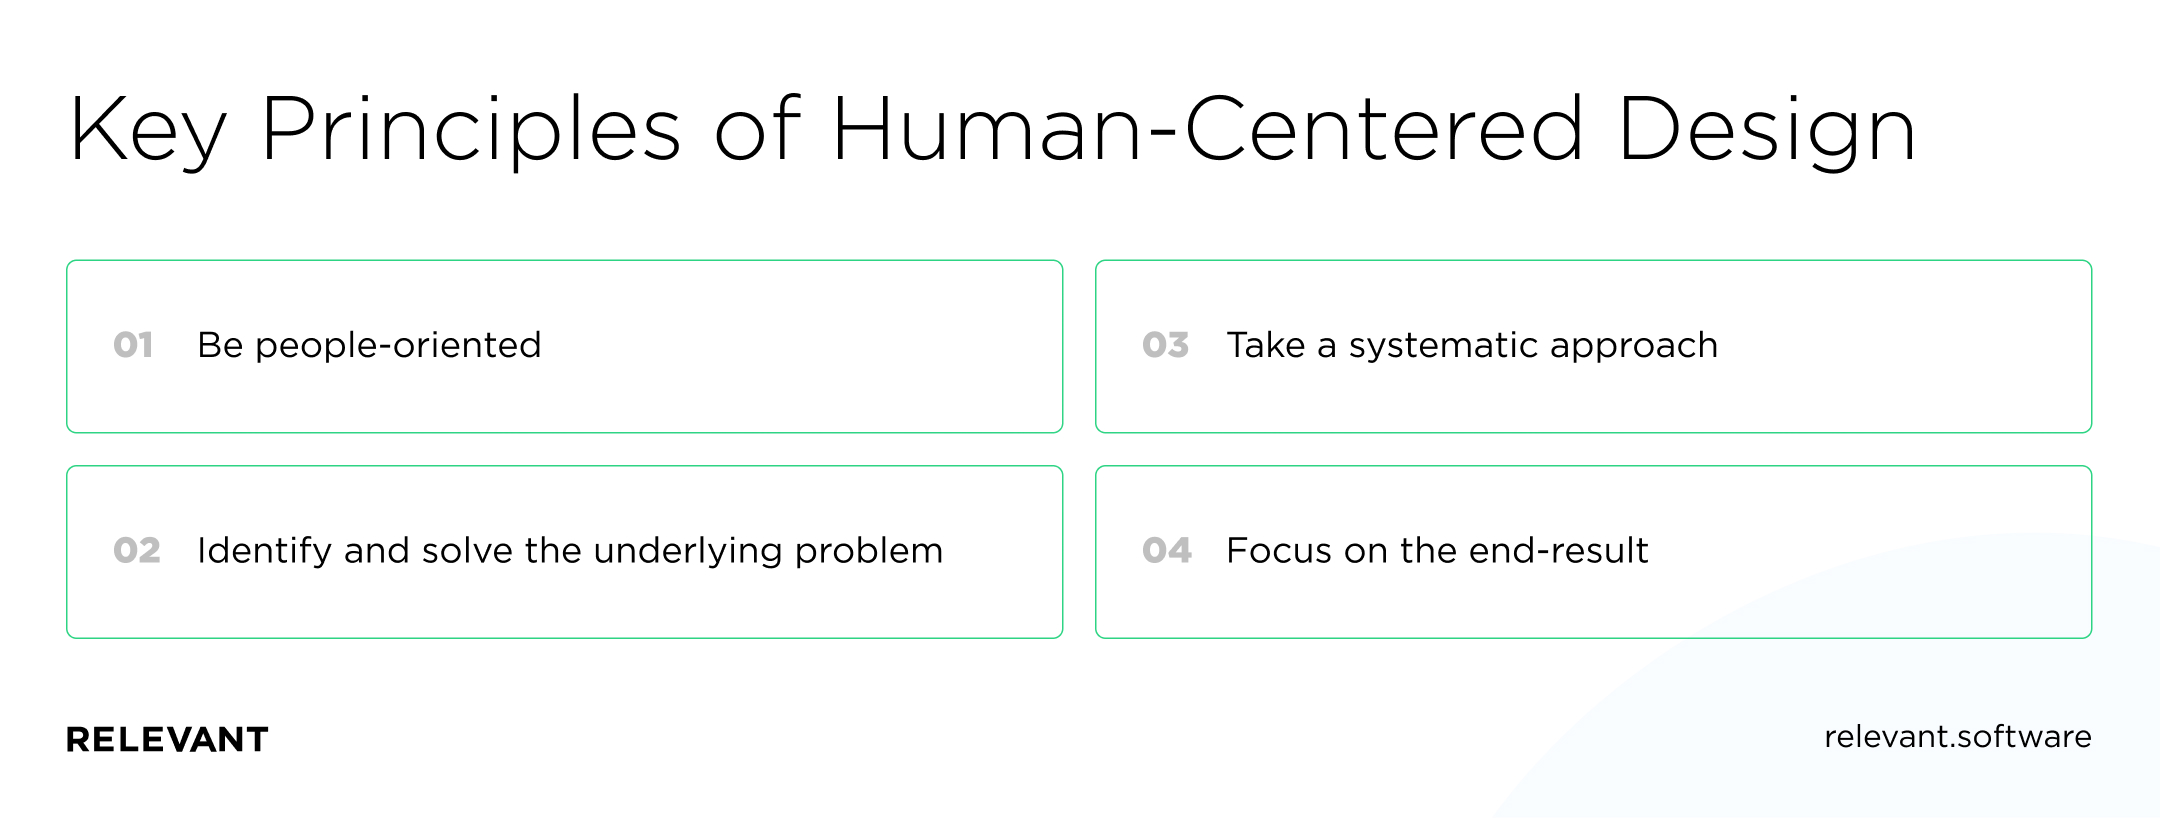 Key Principles of Human-Centered Design